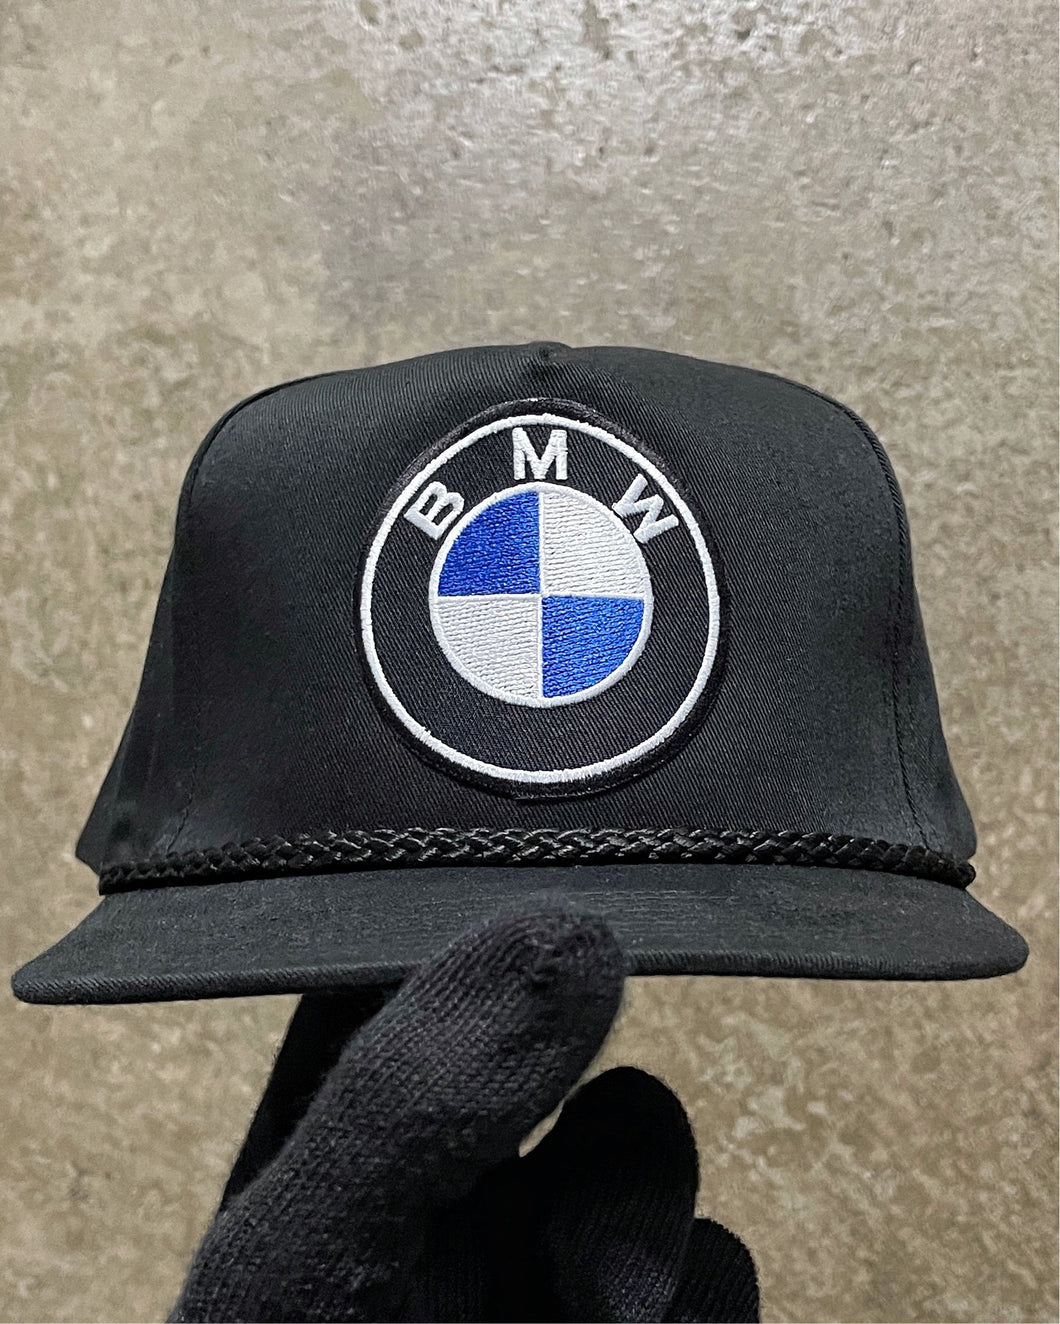 BLACK “BMW” SNAPBACK HAT - 1990S